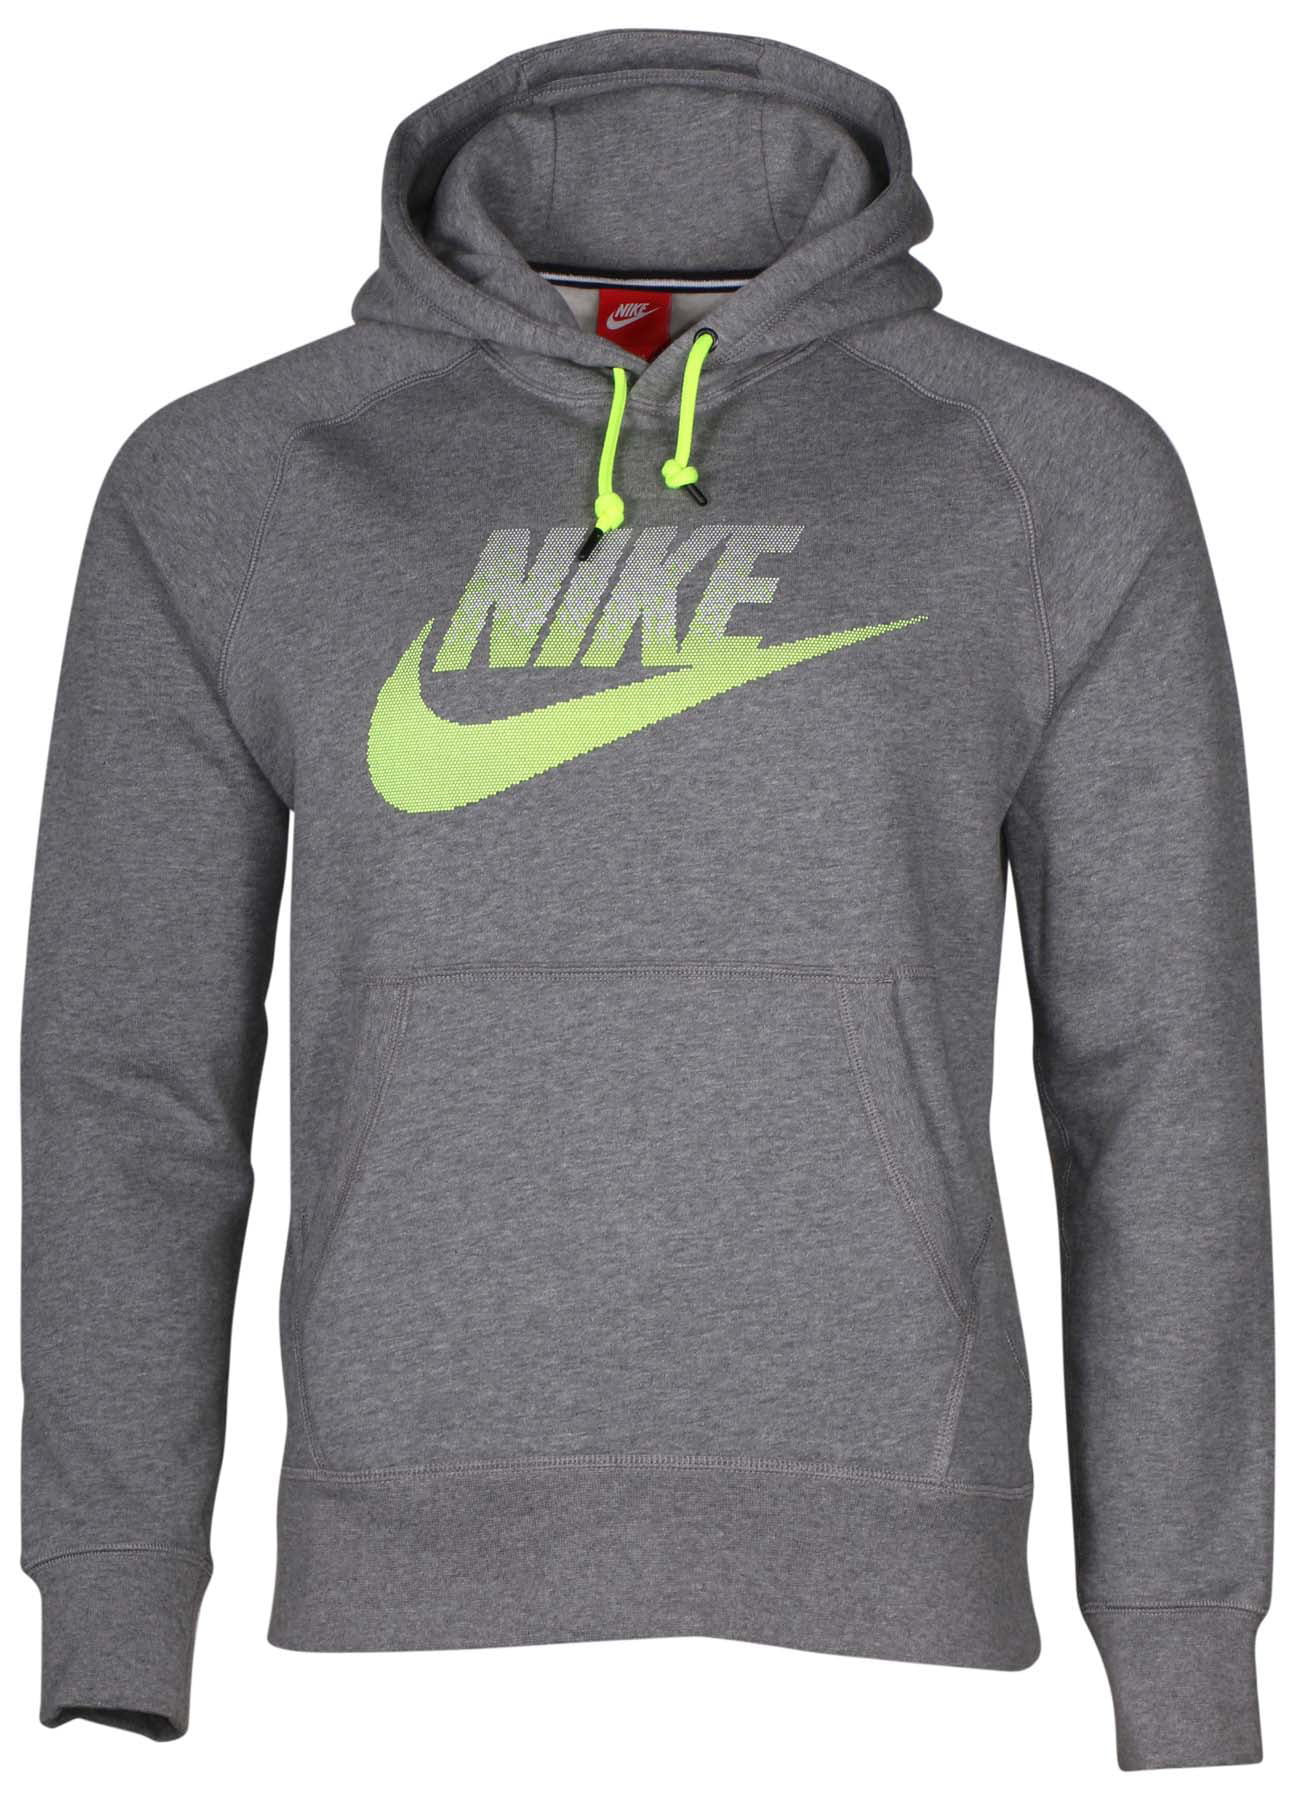 Nike - Nike Men's AW77 Futura Fleece Pullover Hoodie - Walmart.com ...